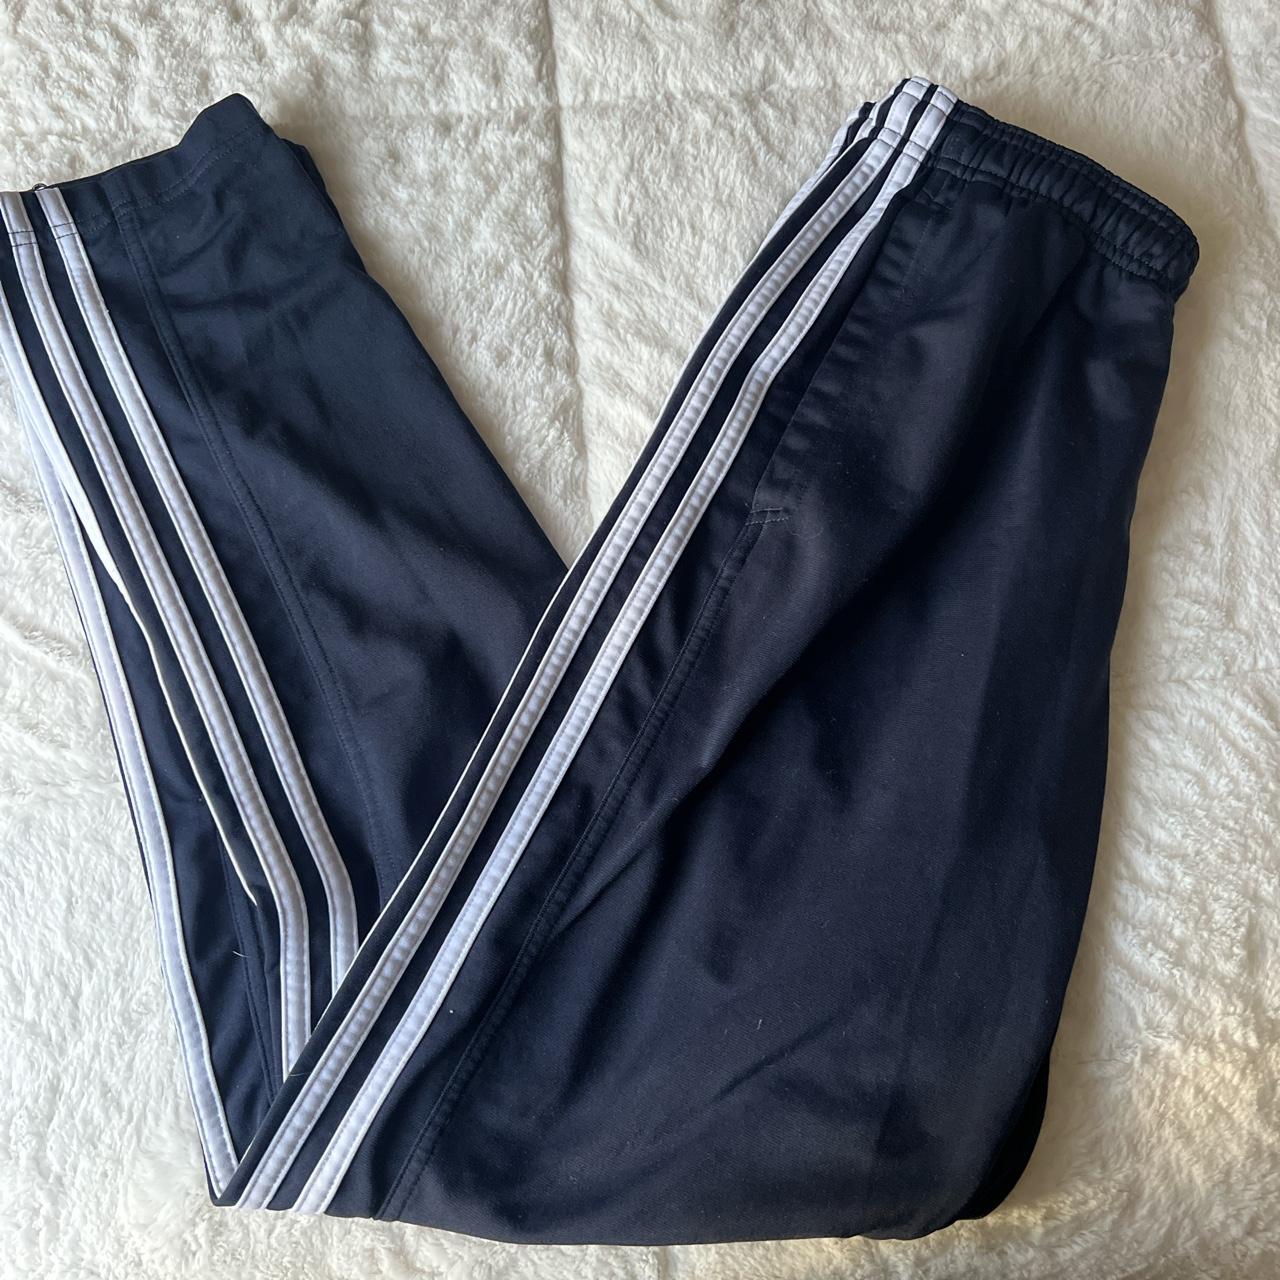 Adidas sports pants - Depop